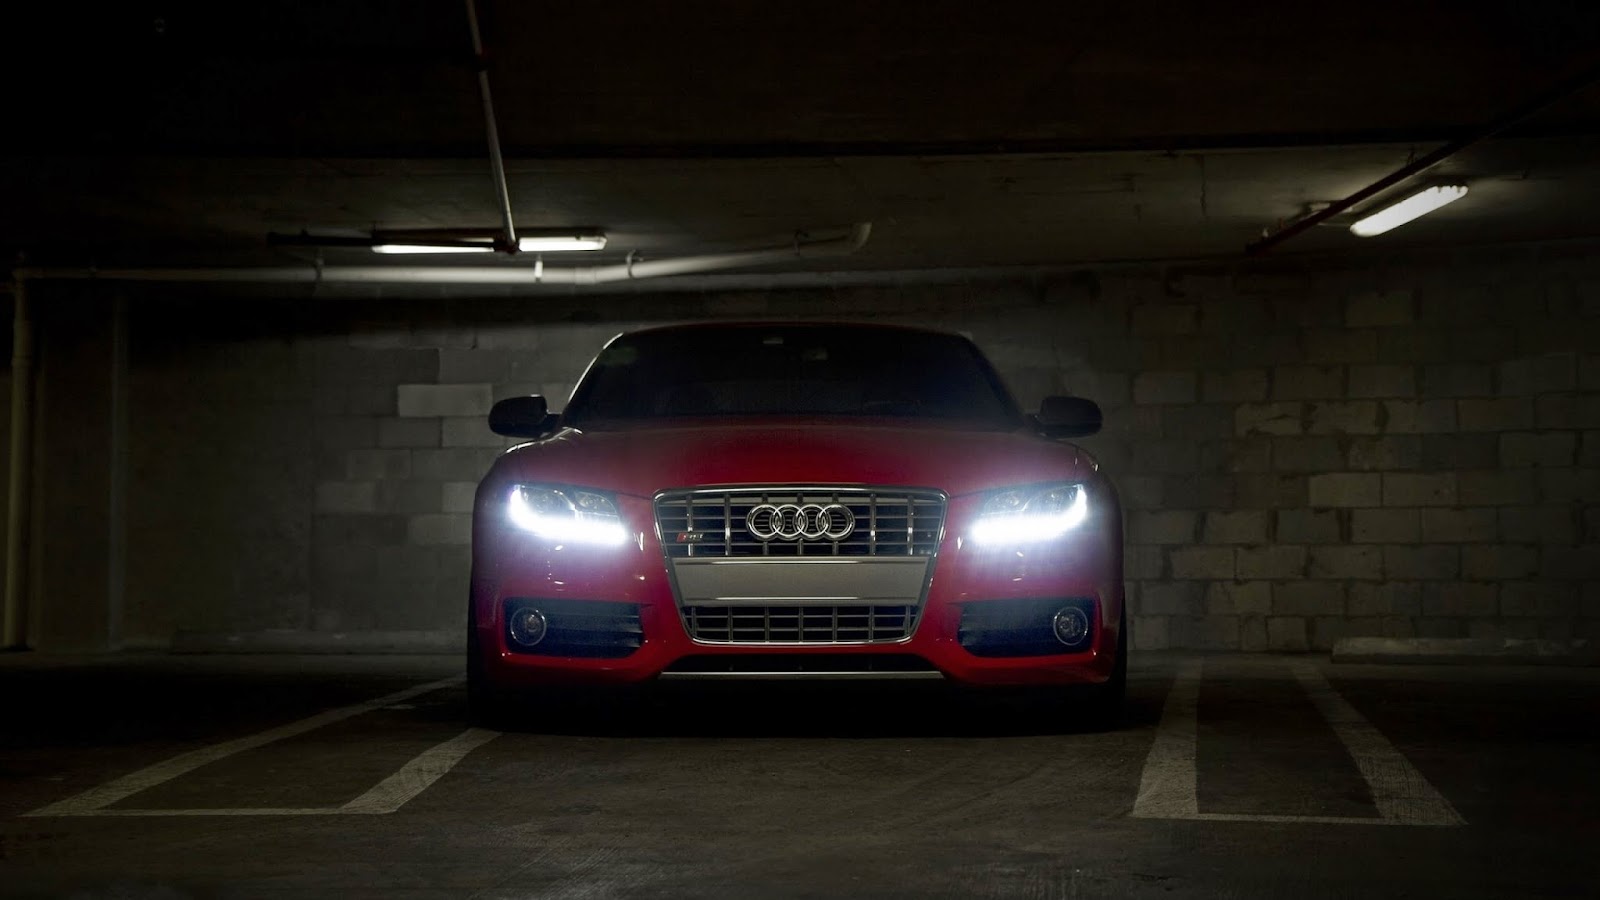 Audi S5 Wallpaper HD With Cars Jokercars Super